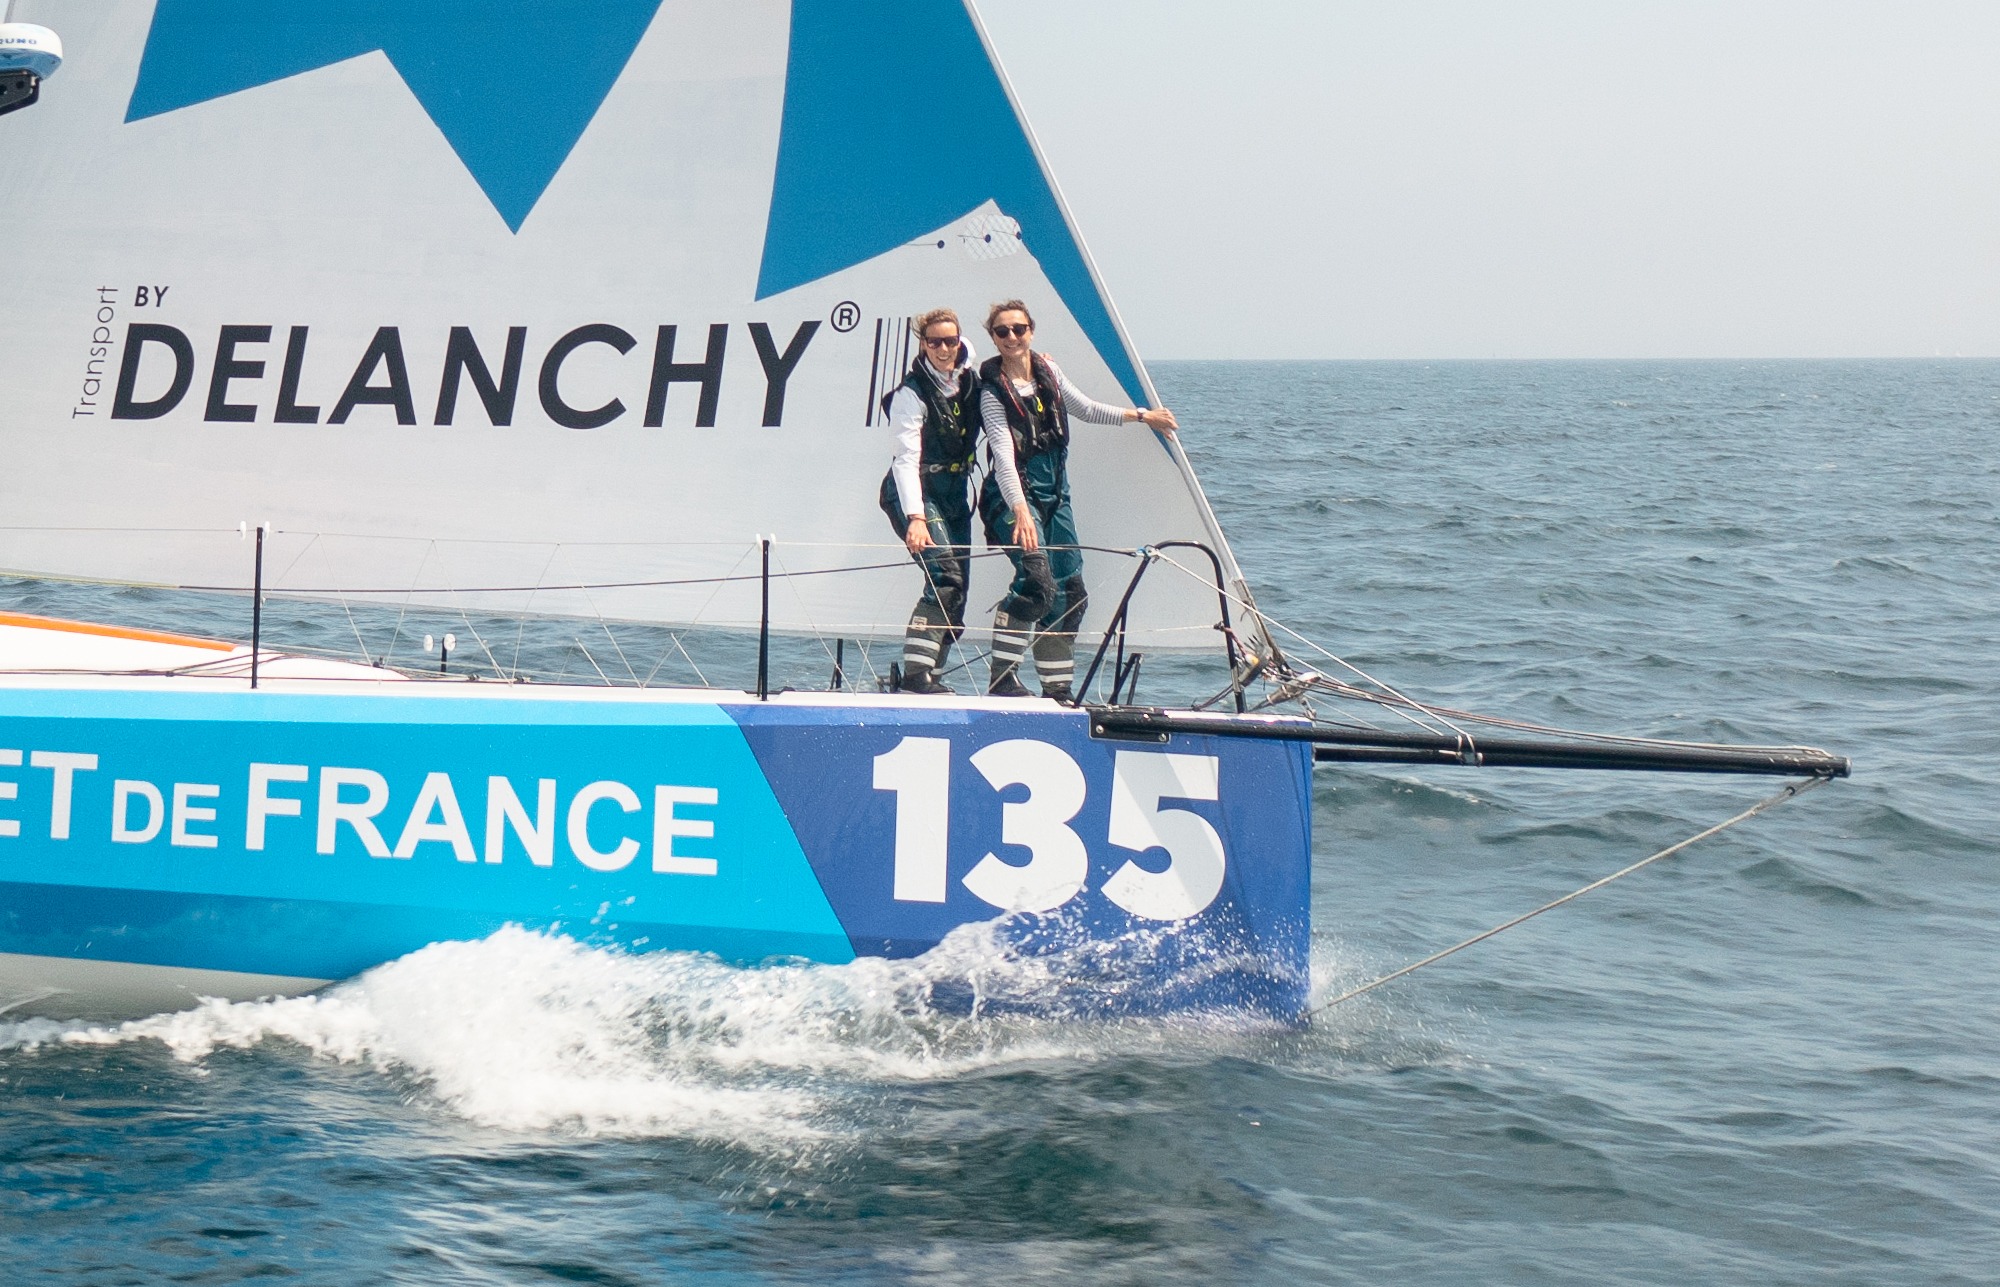 DELANCHY sostiene l’equipaggio 100% femminile di Les Voileuses au Large